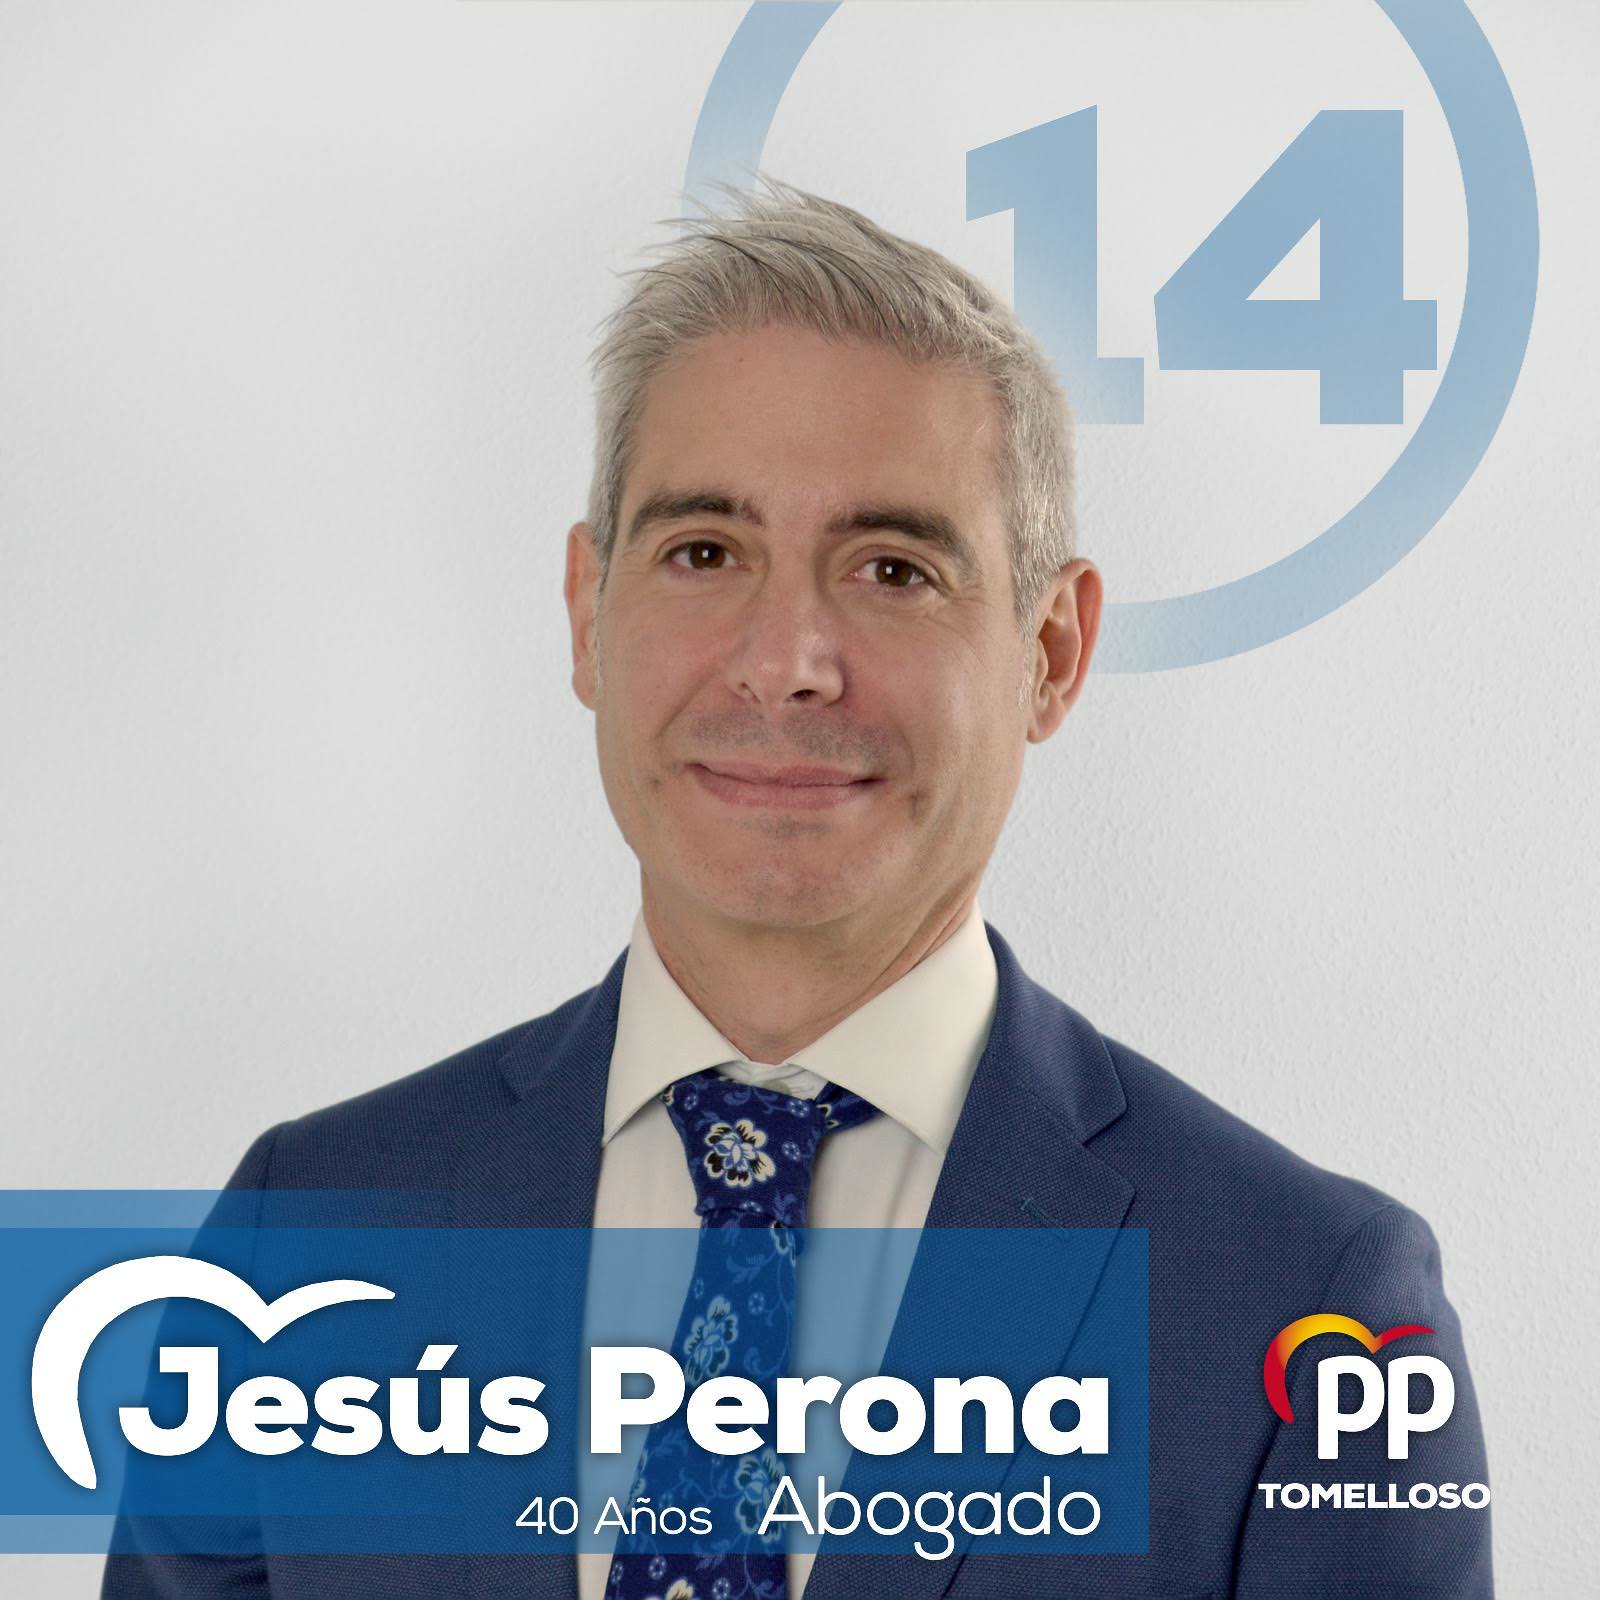 jesus-perona-pp-tomelloso